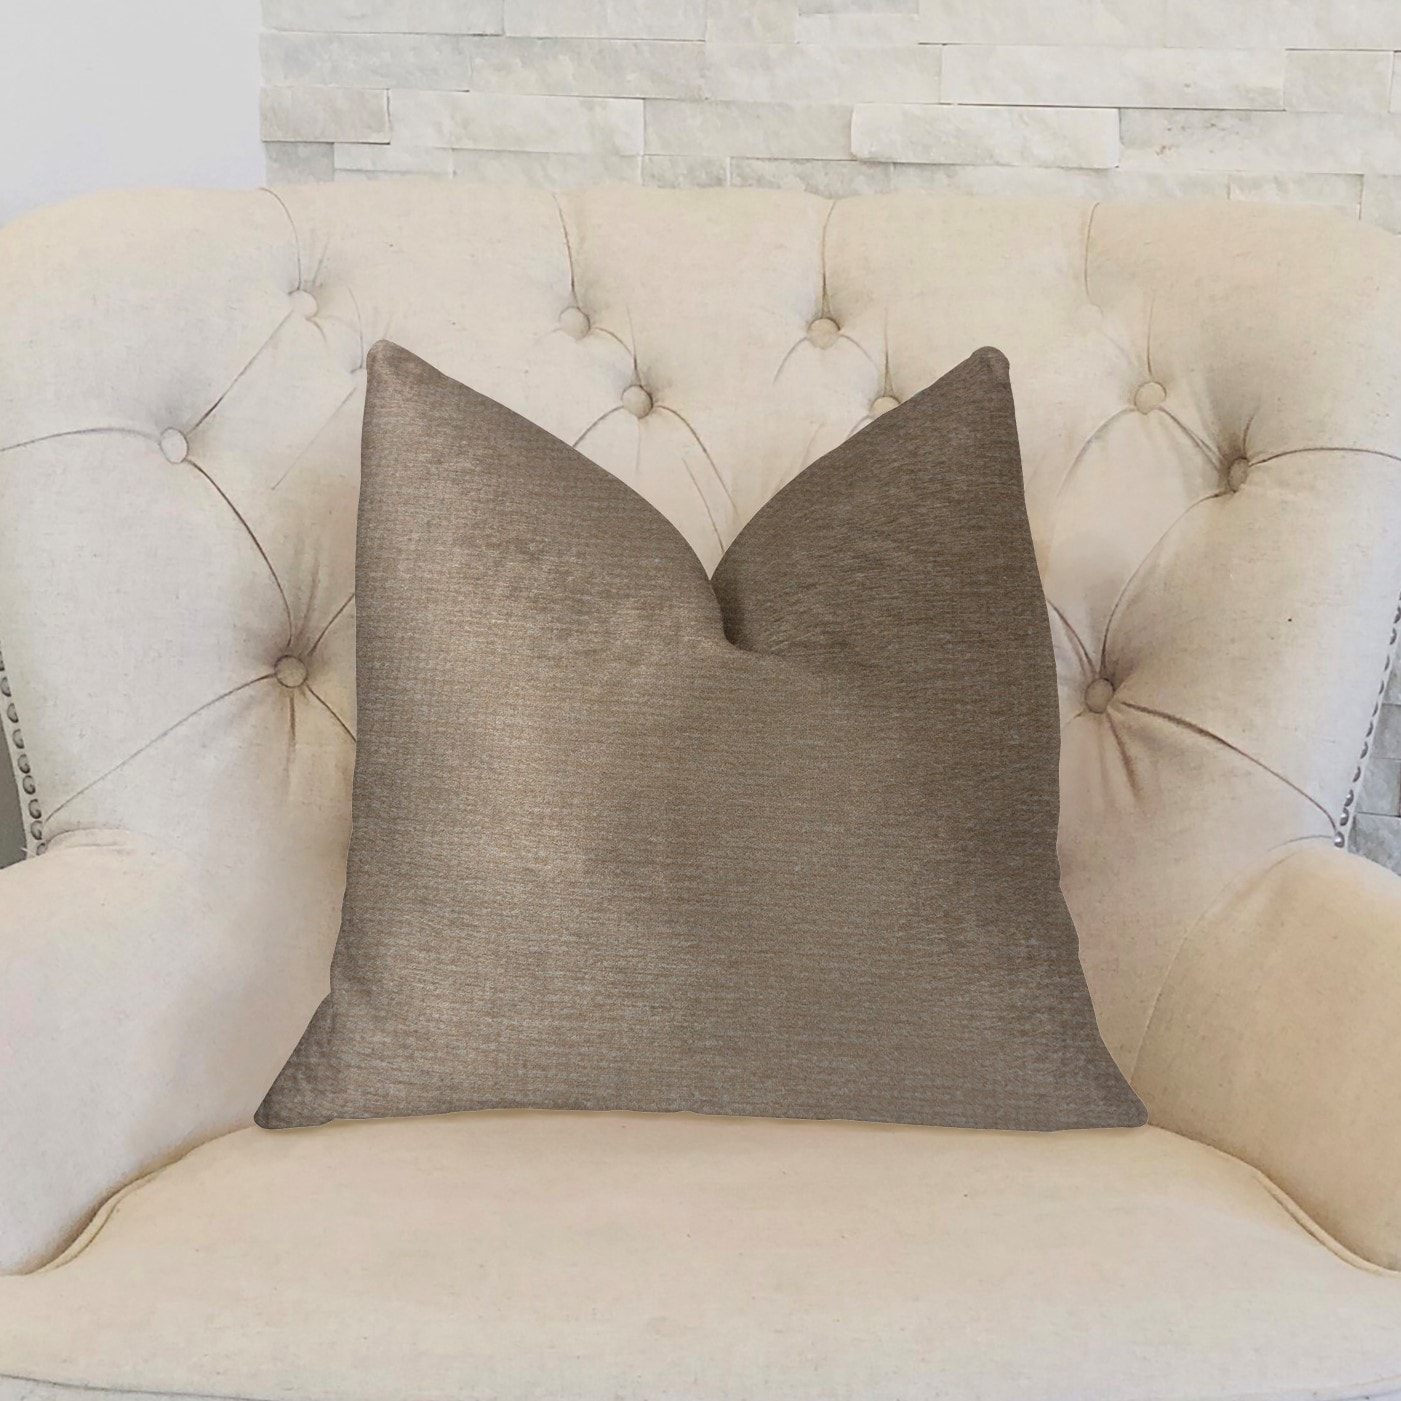 Holan Velvet Pleat Decorative Pillow, Lush Decor